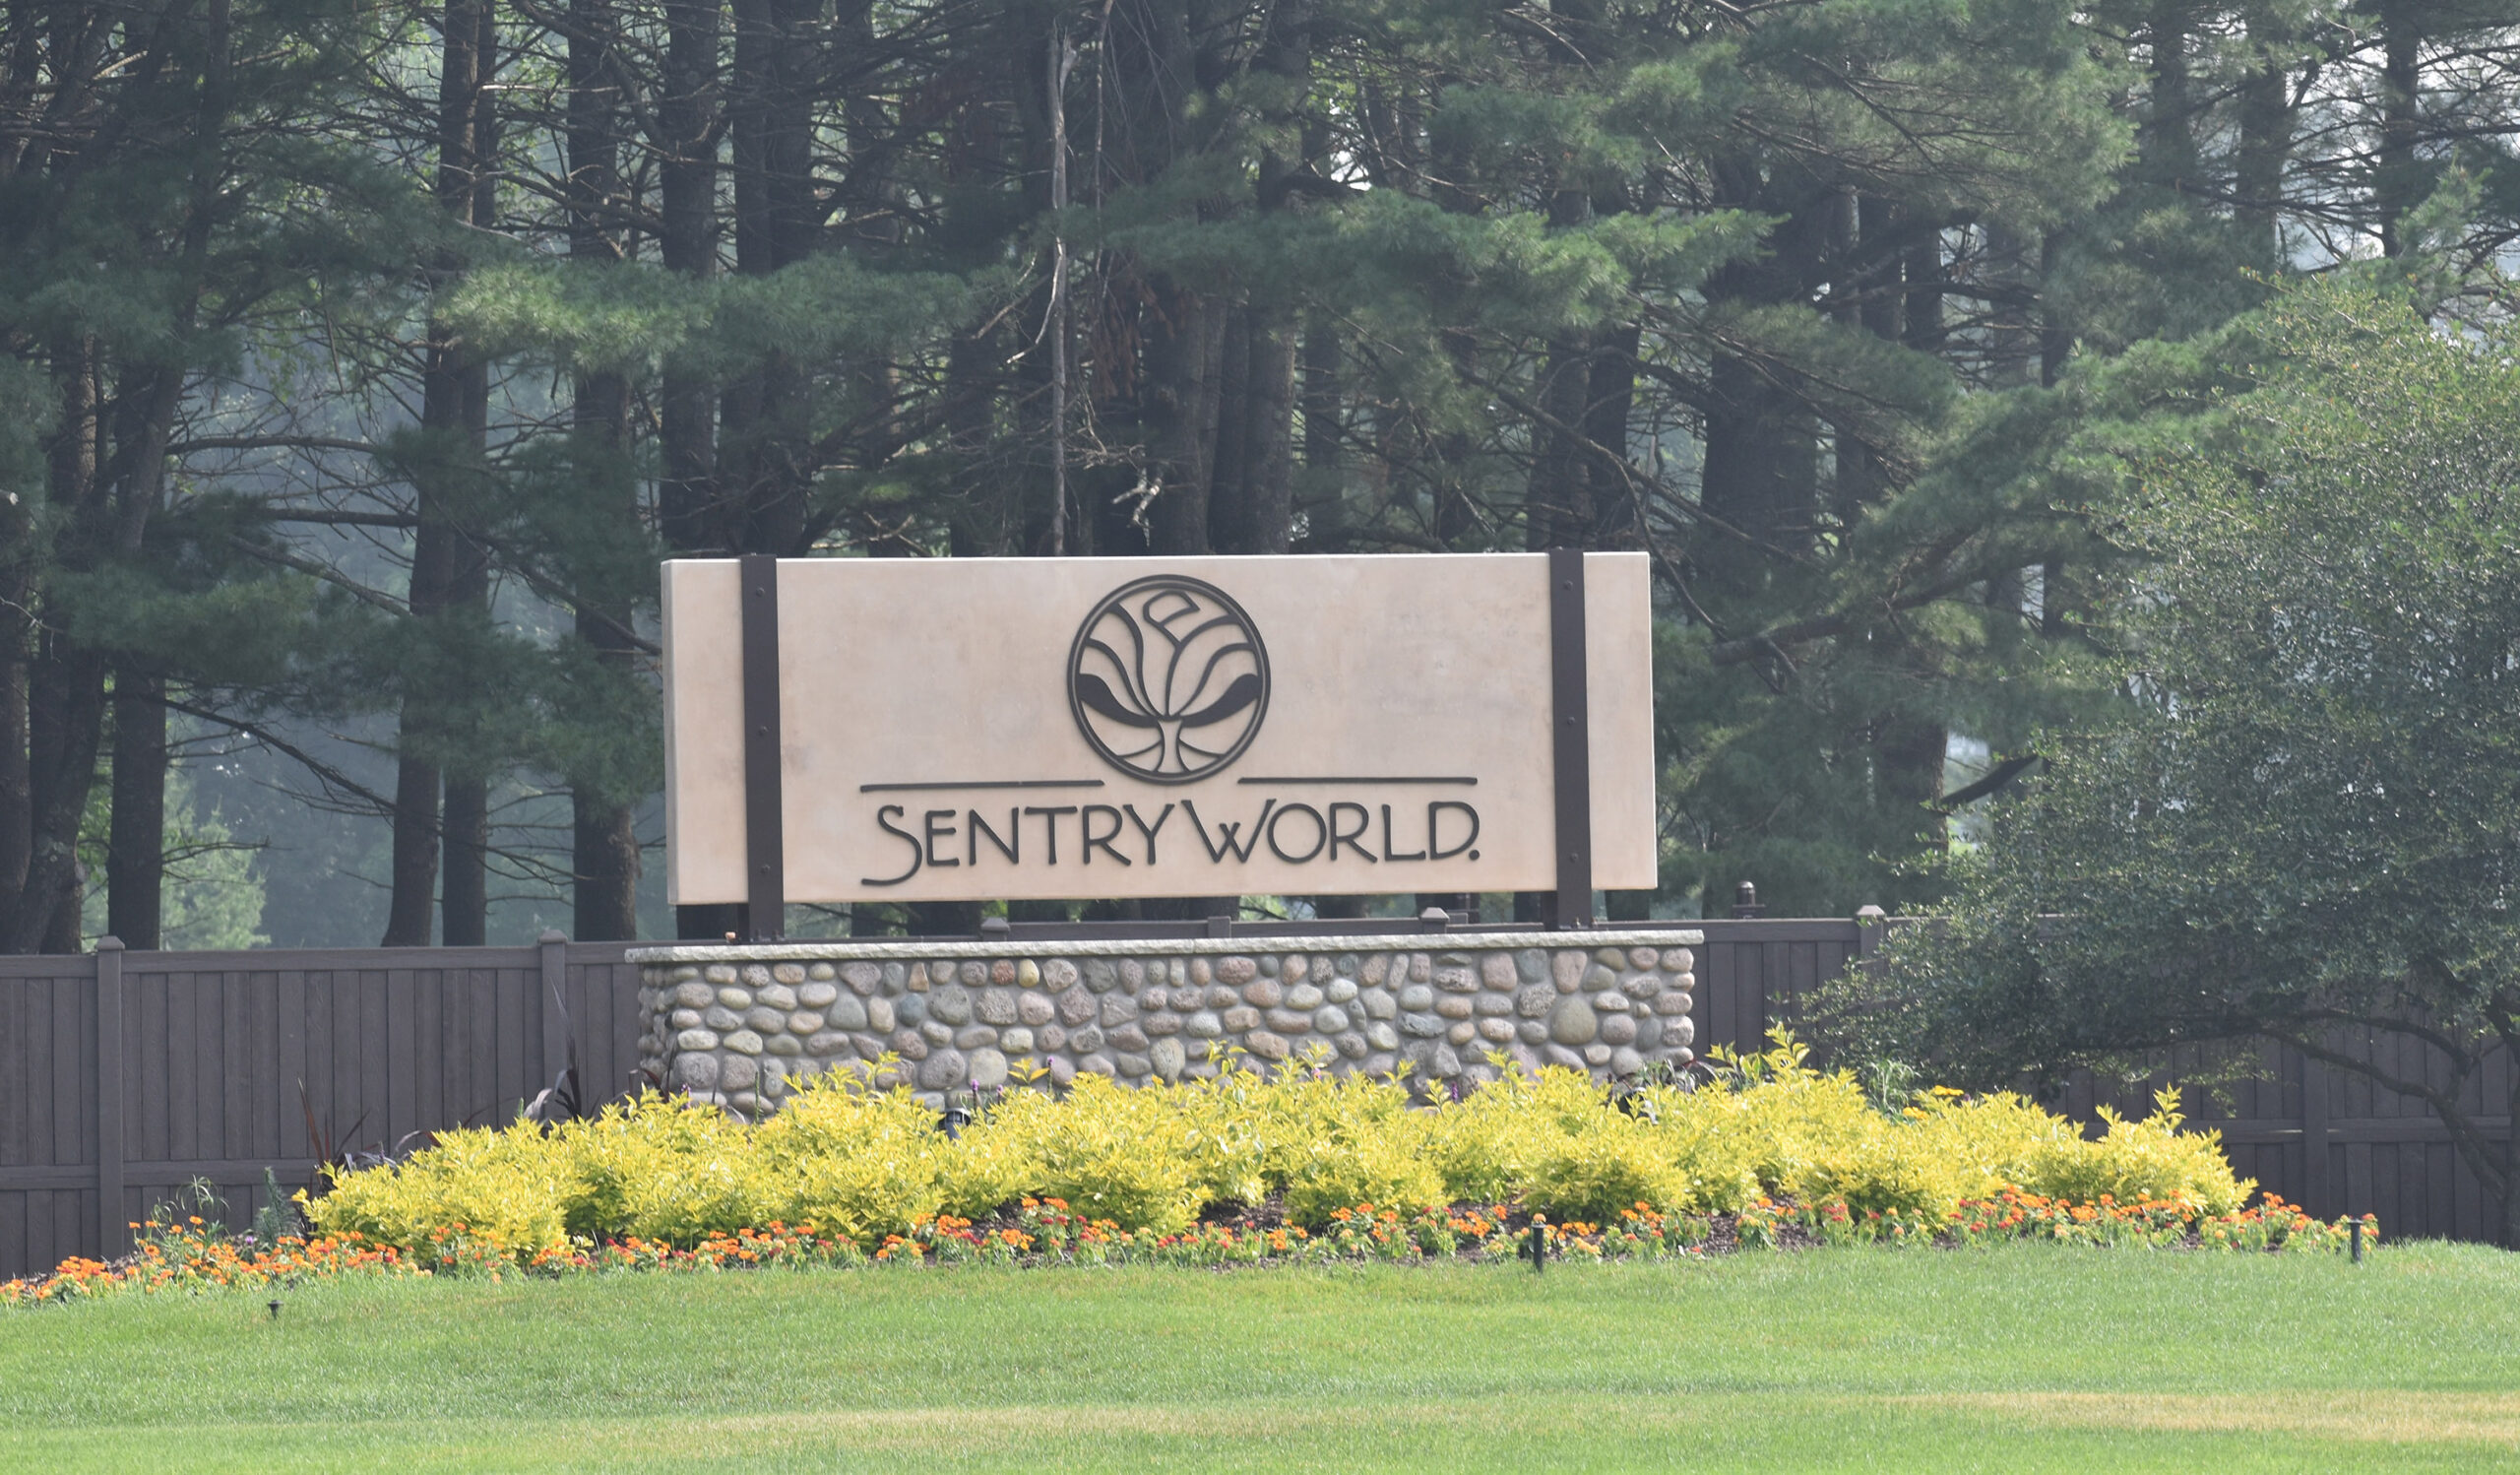 Stevens Point's SentryWorld golf course hosts the U.S. Golf Association Senior Open from June 29 through July 2.